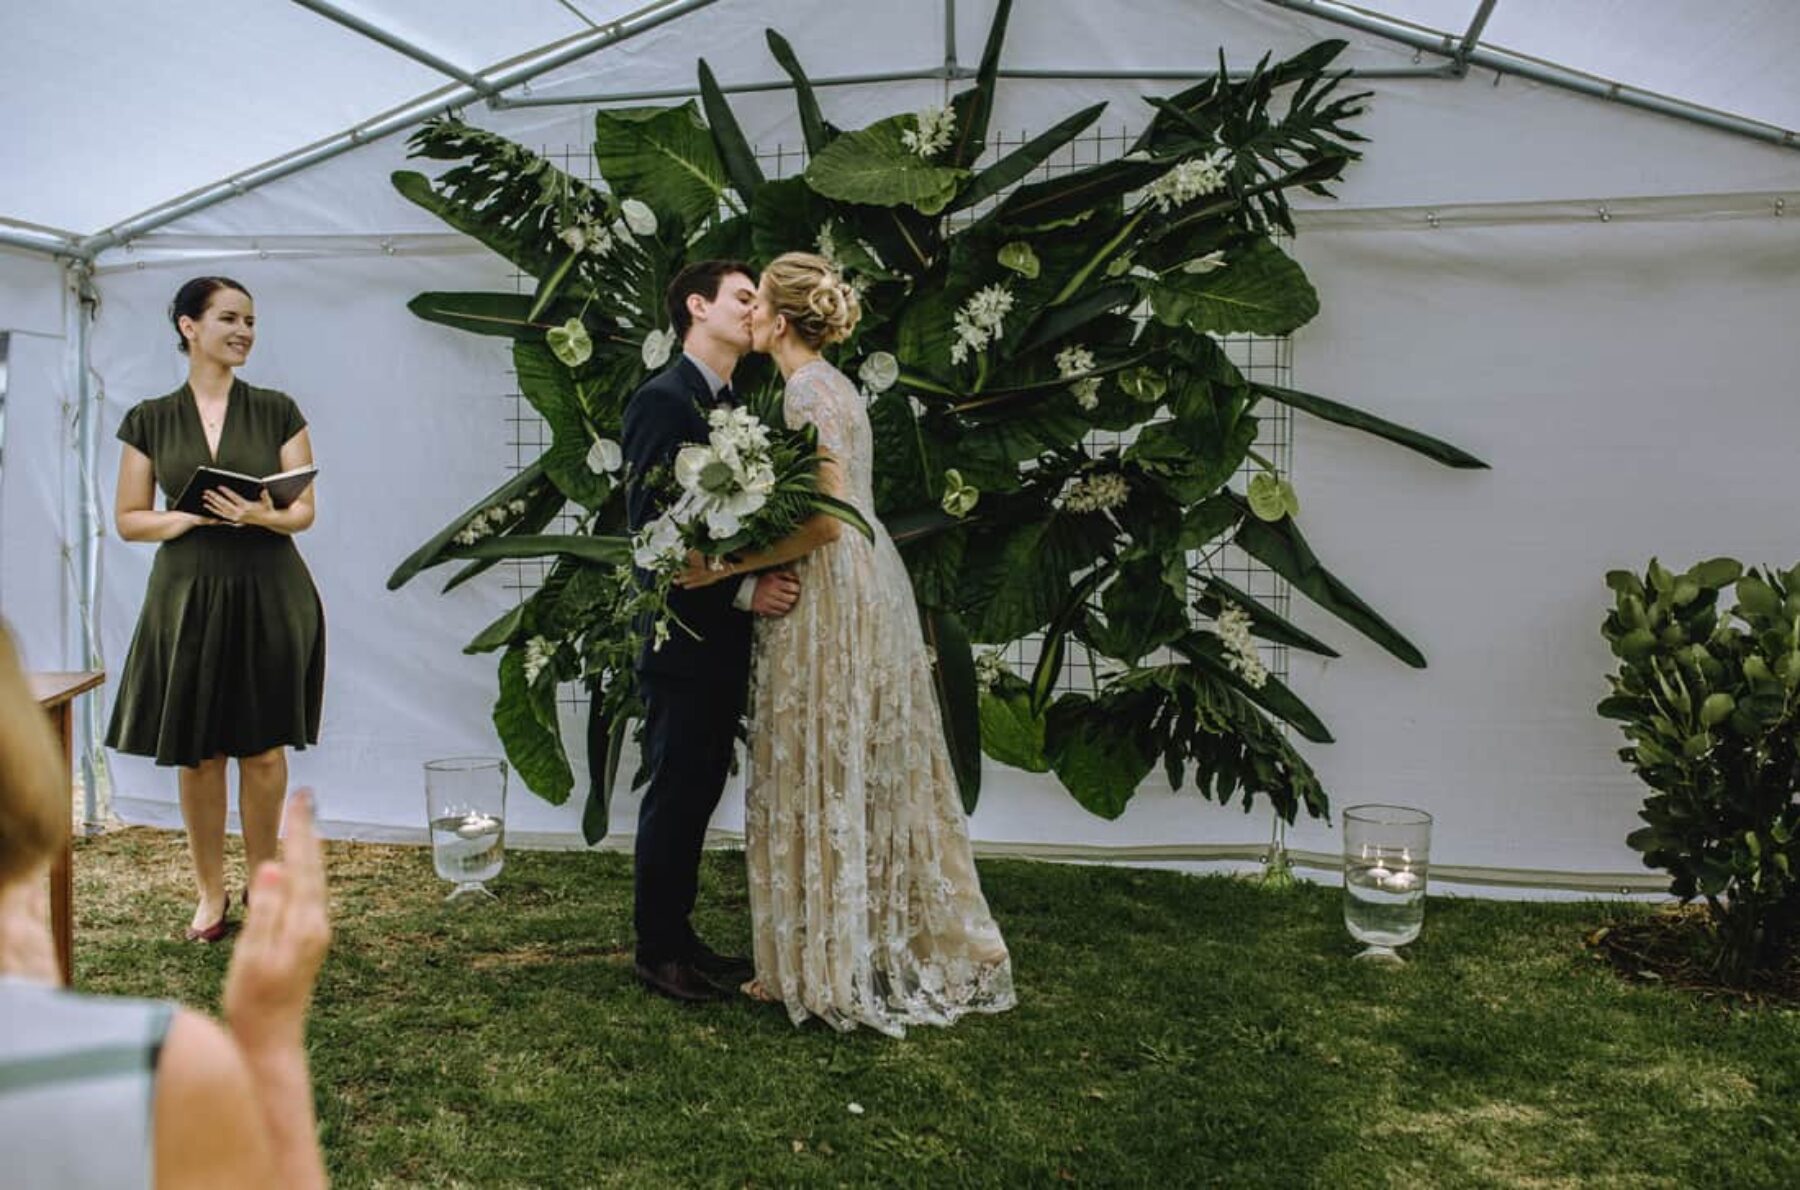 DIY greenery wedding backdrop with tropical oliage